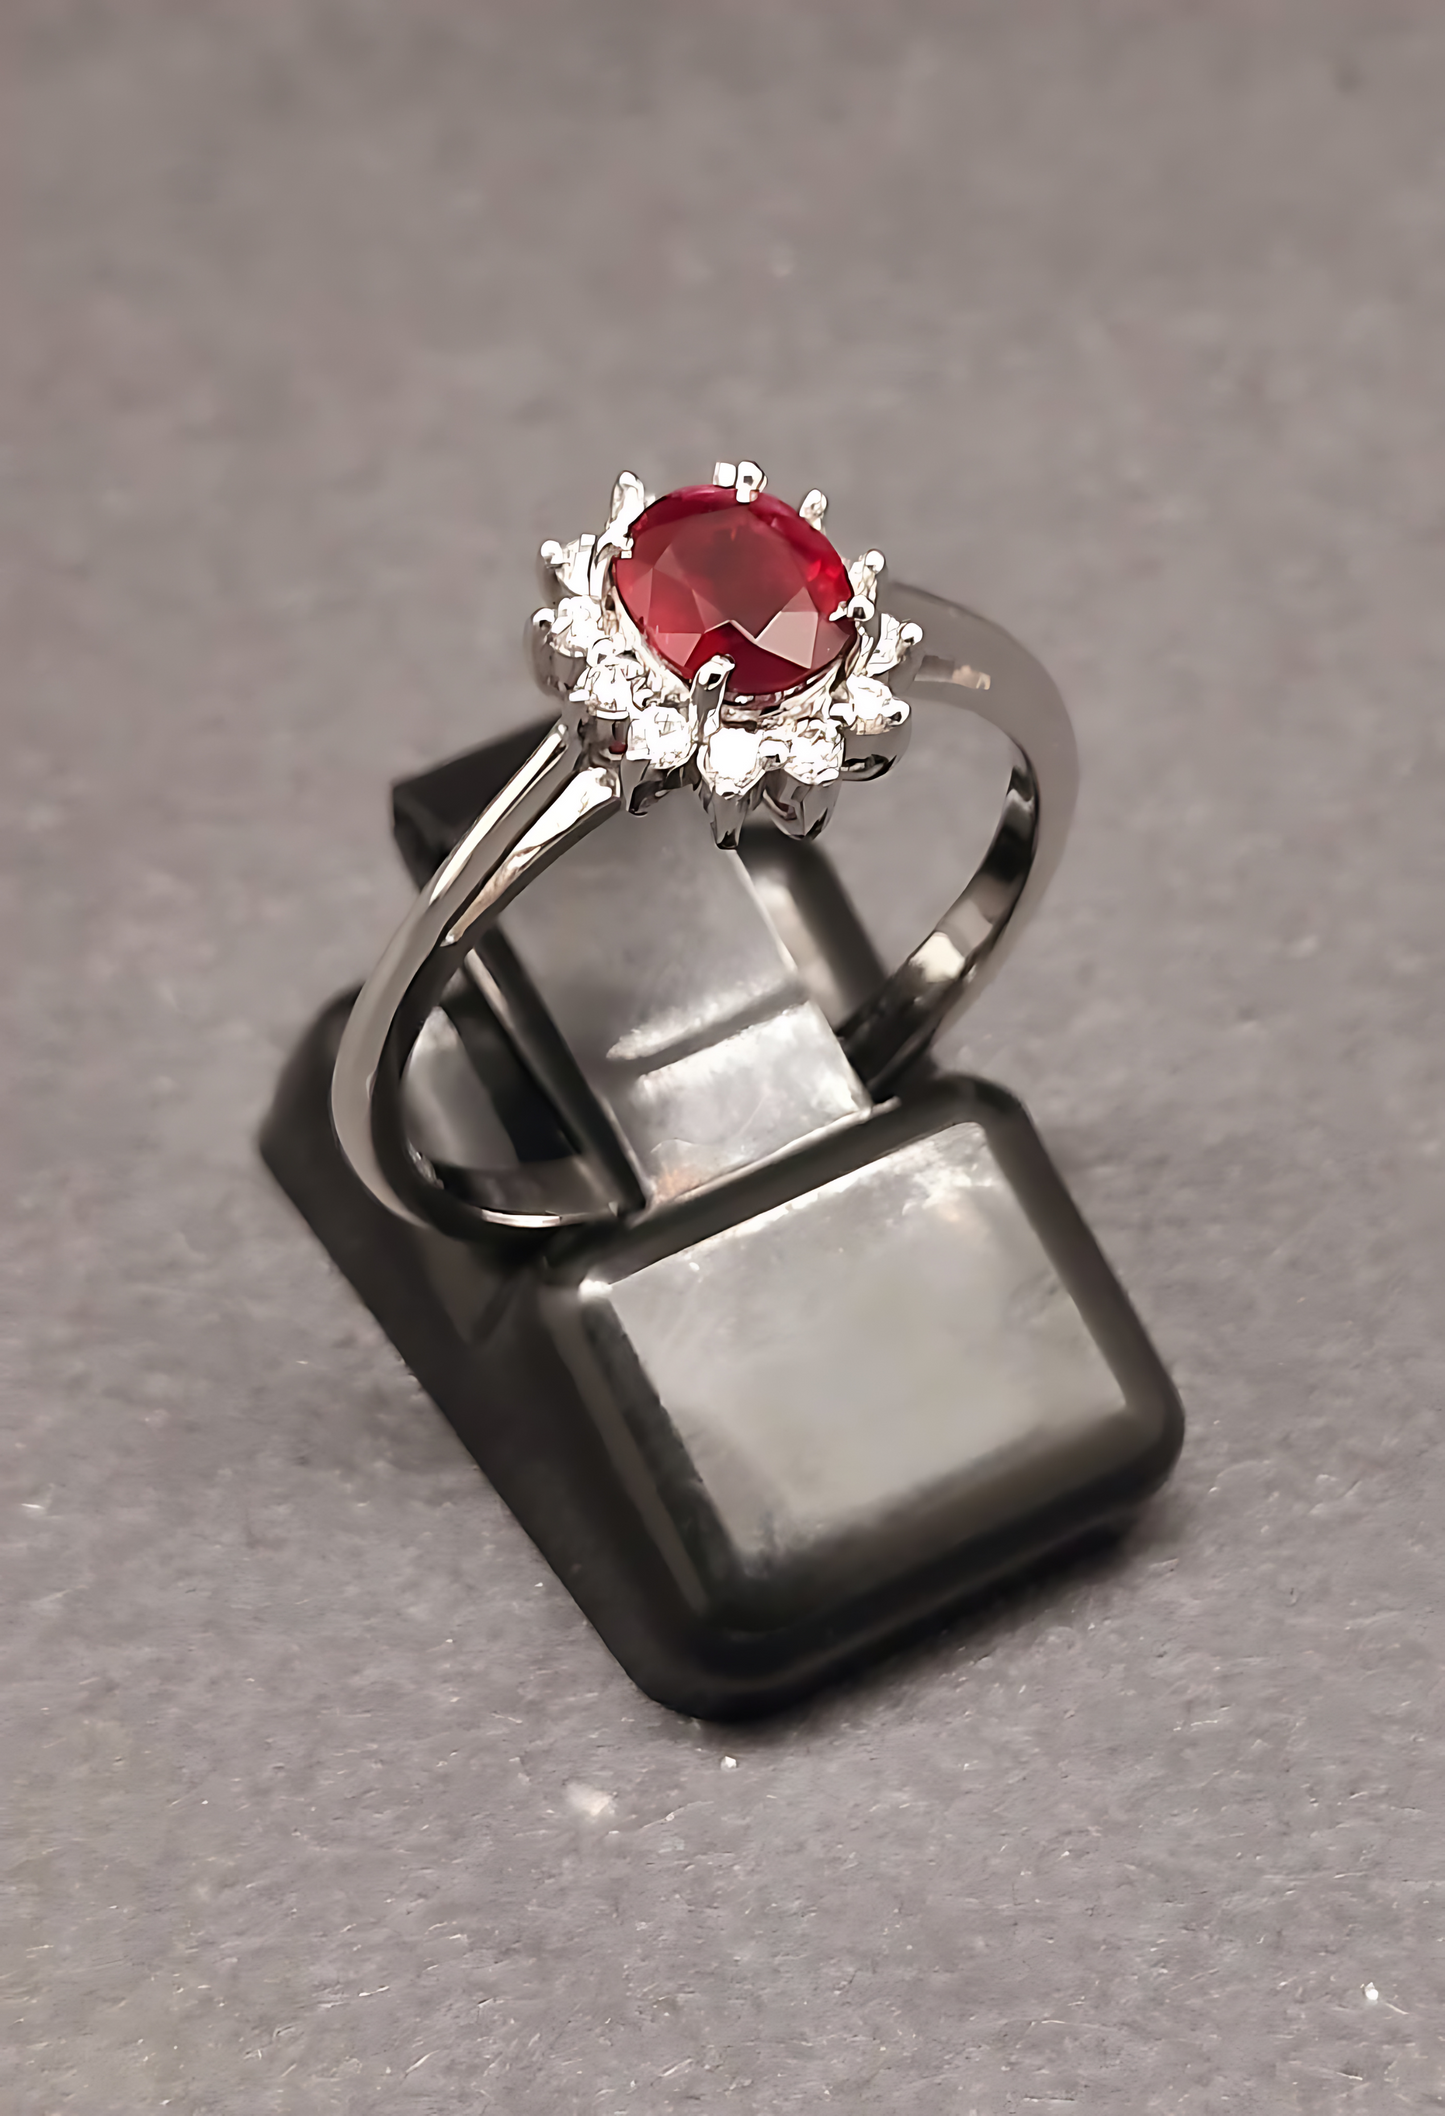 Handmade 18K white gold ring with natural unheated Burmese purplish red Ruby & natural Vvs1 high quality Diamonds ring.